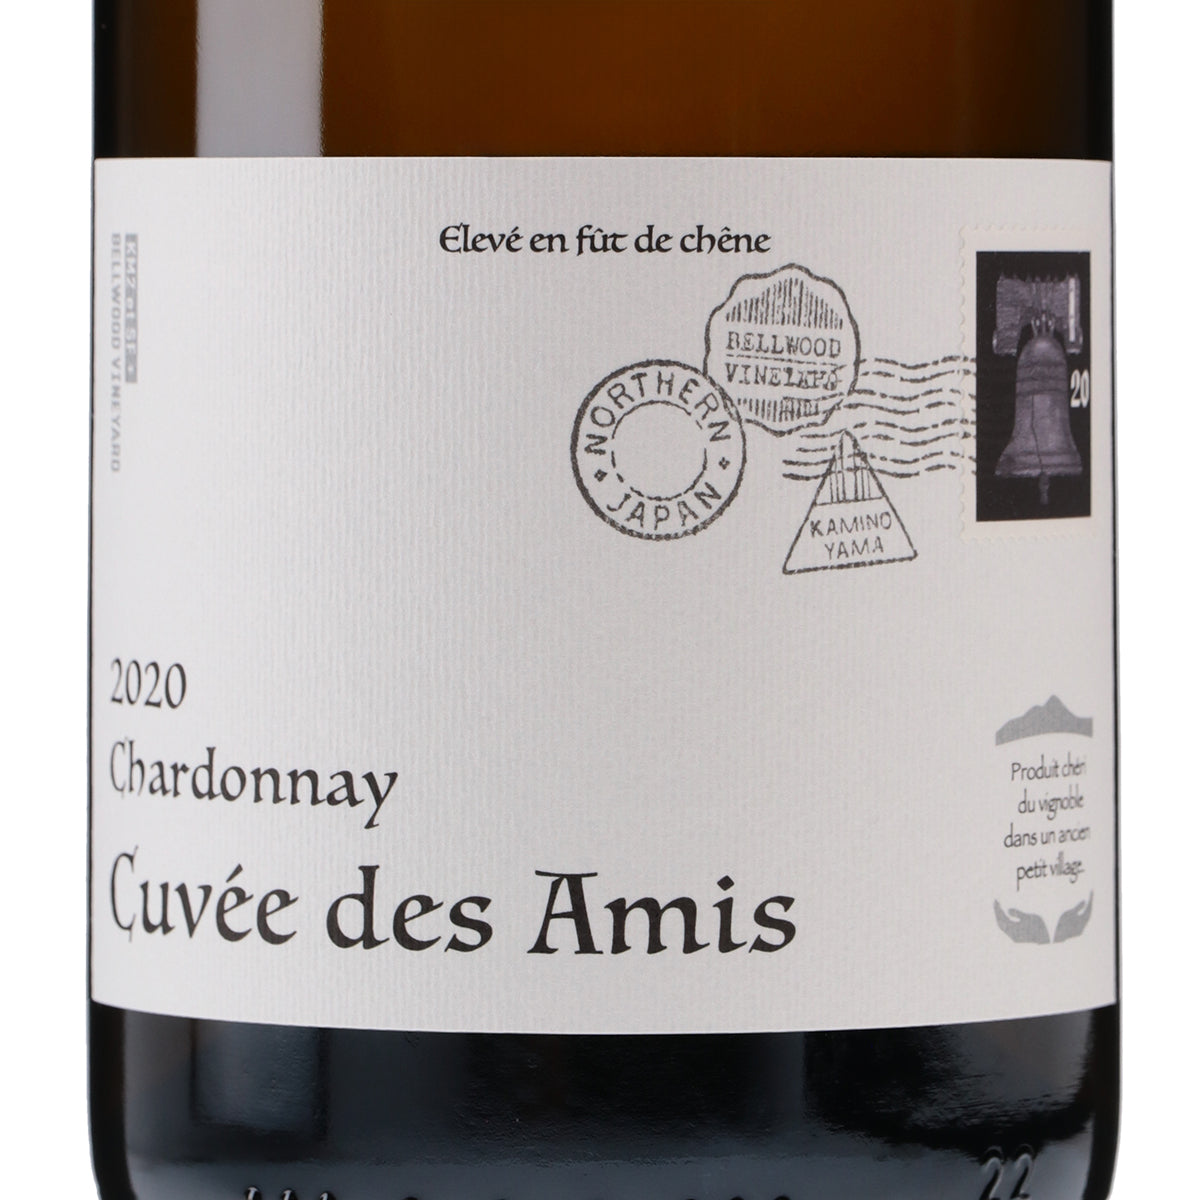 Cuvee des Amis 2020 Chardonnay